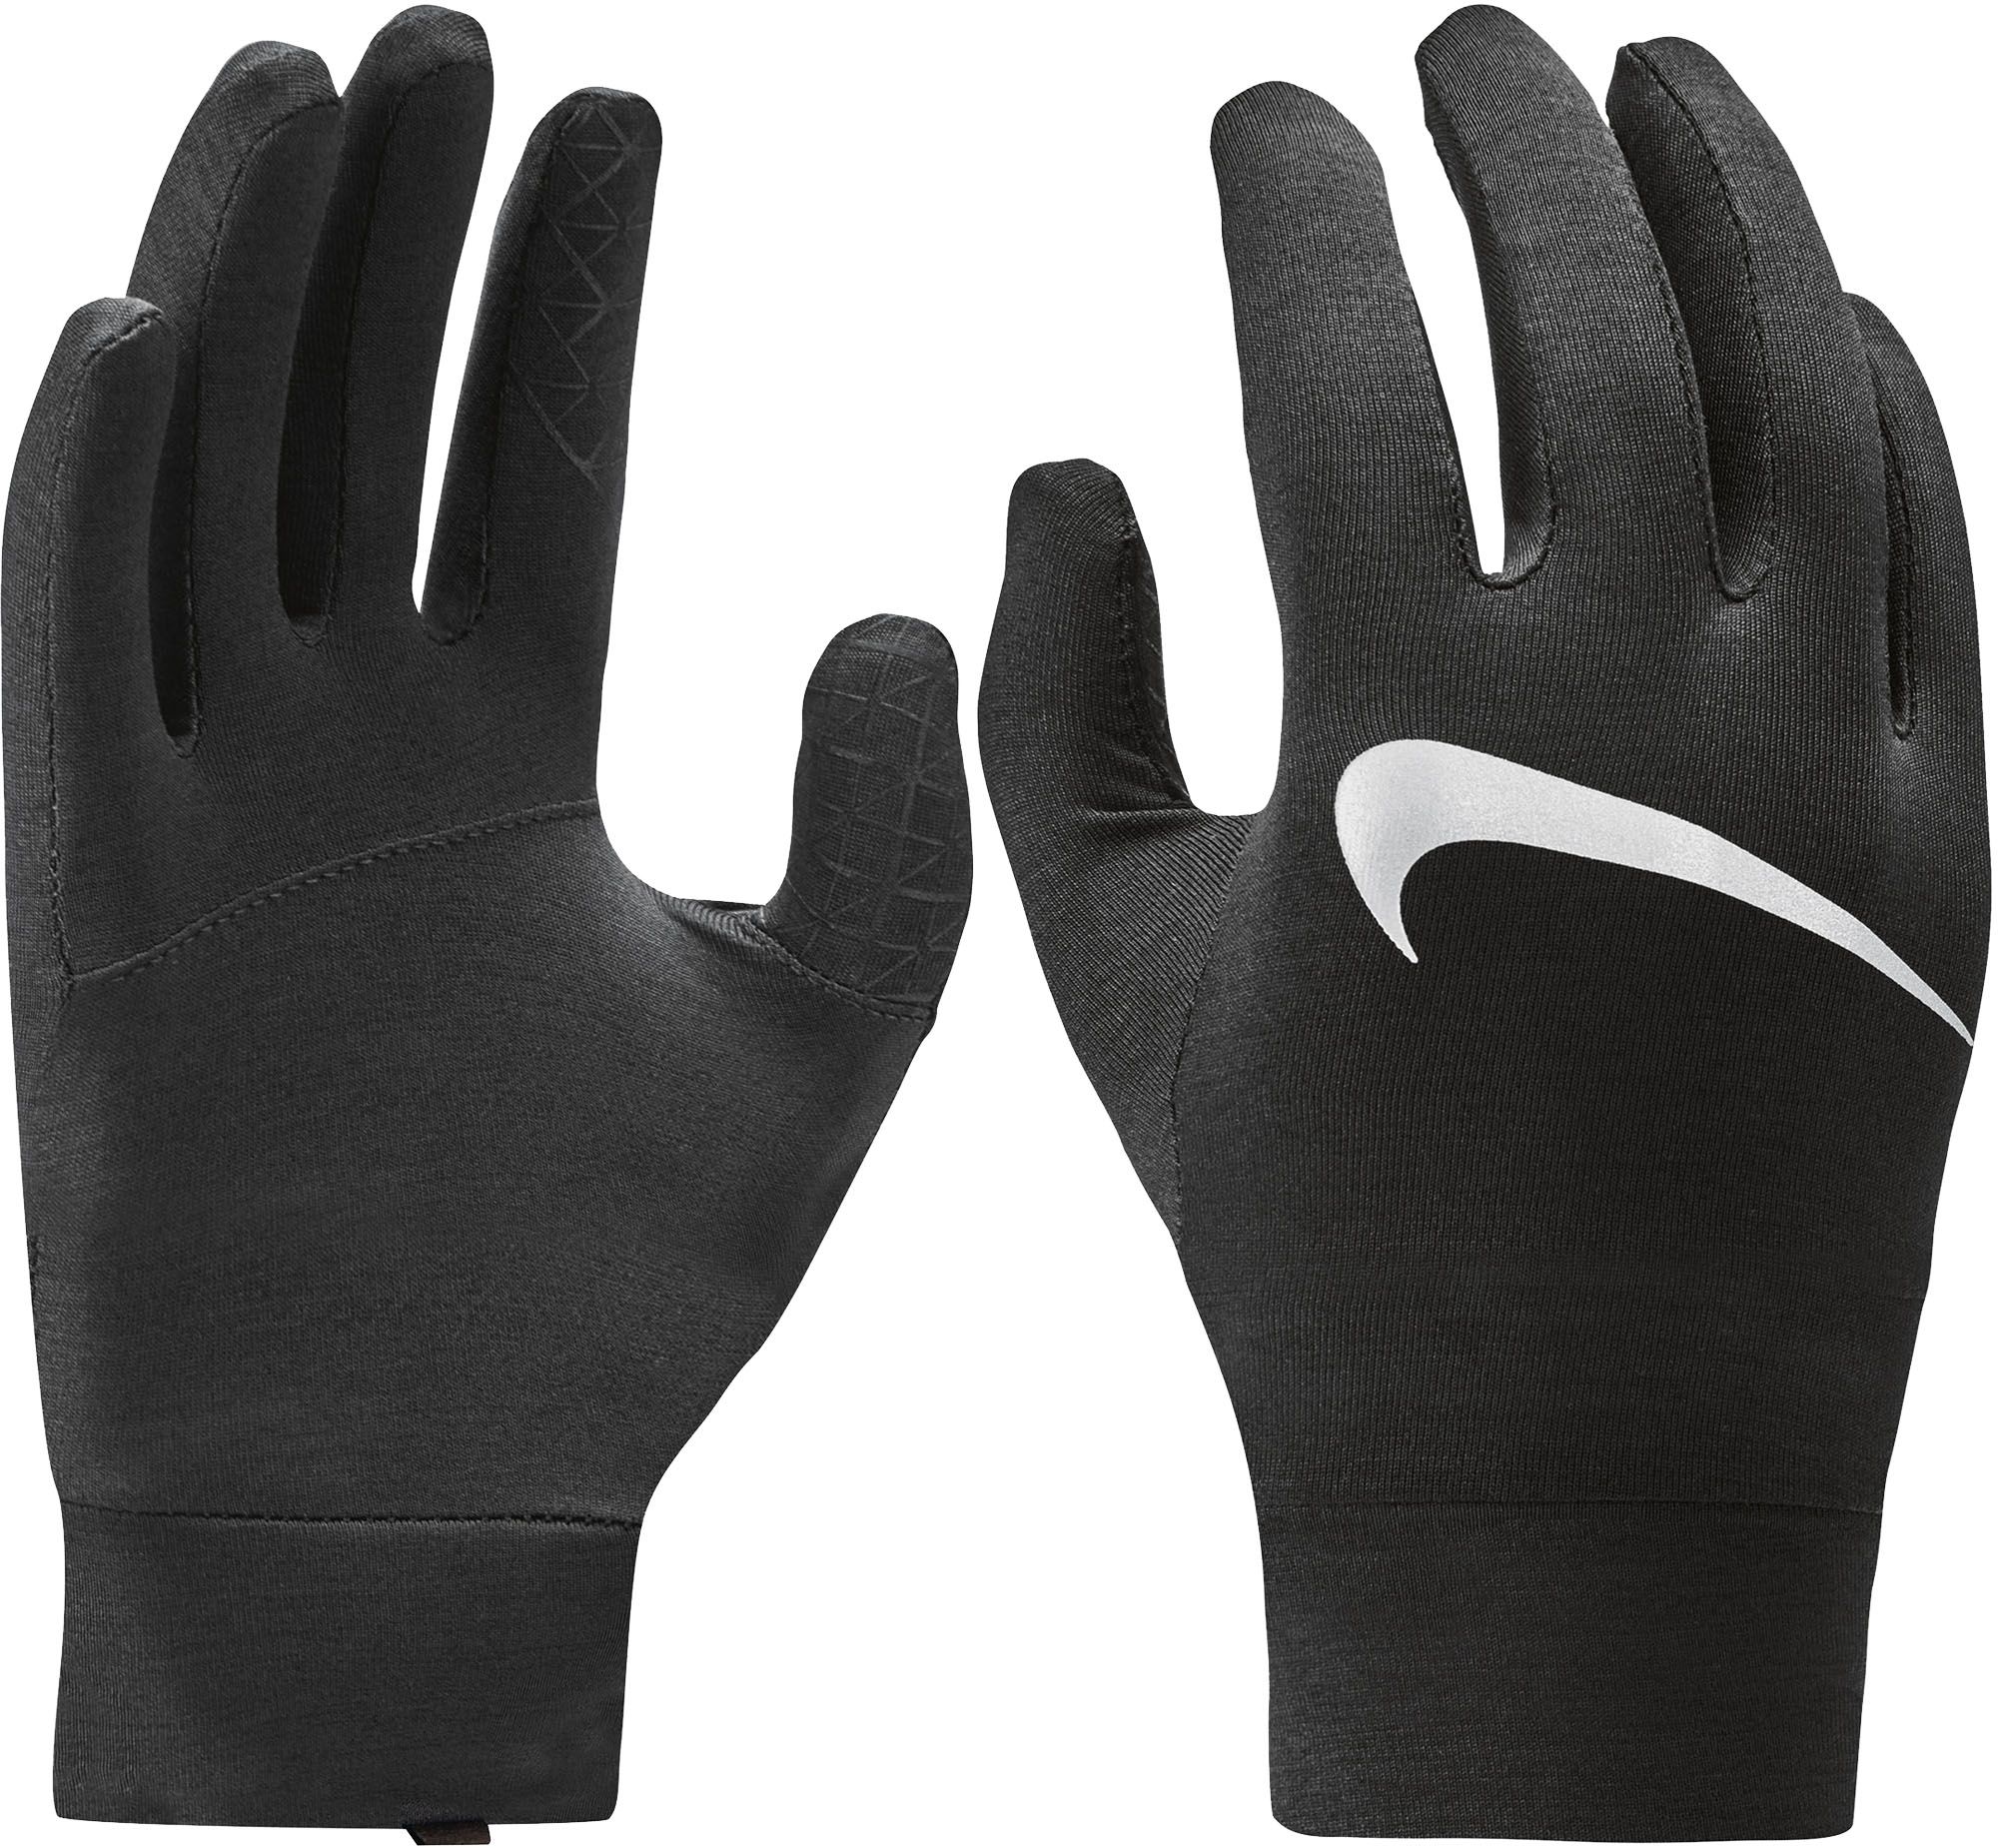 thin nike gloves